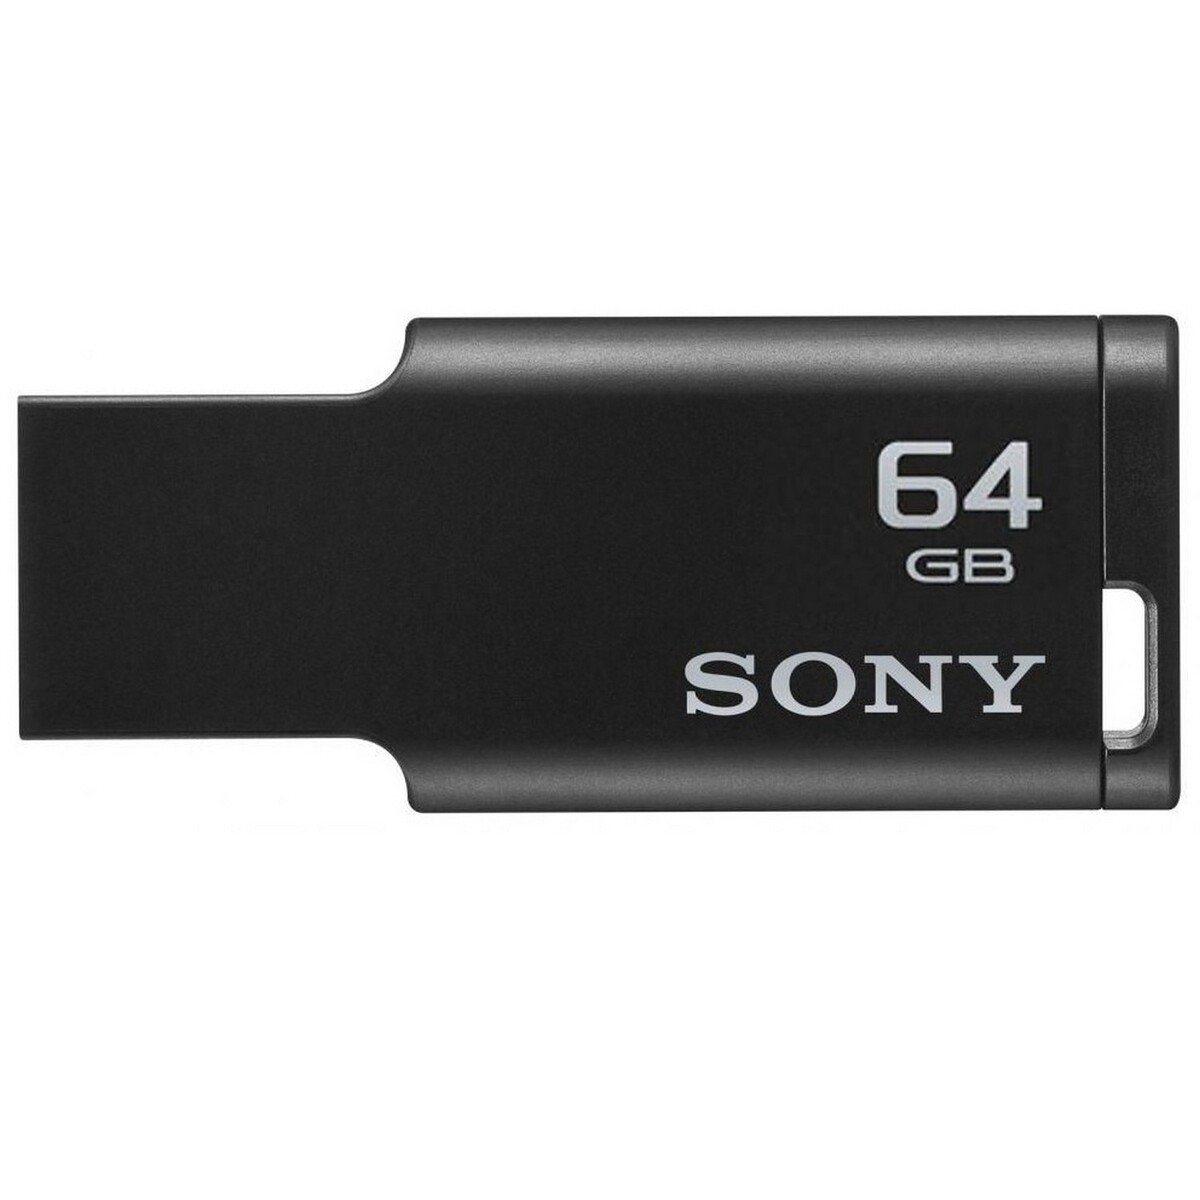 Sony Flash Drive Tiny 64GB Black